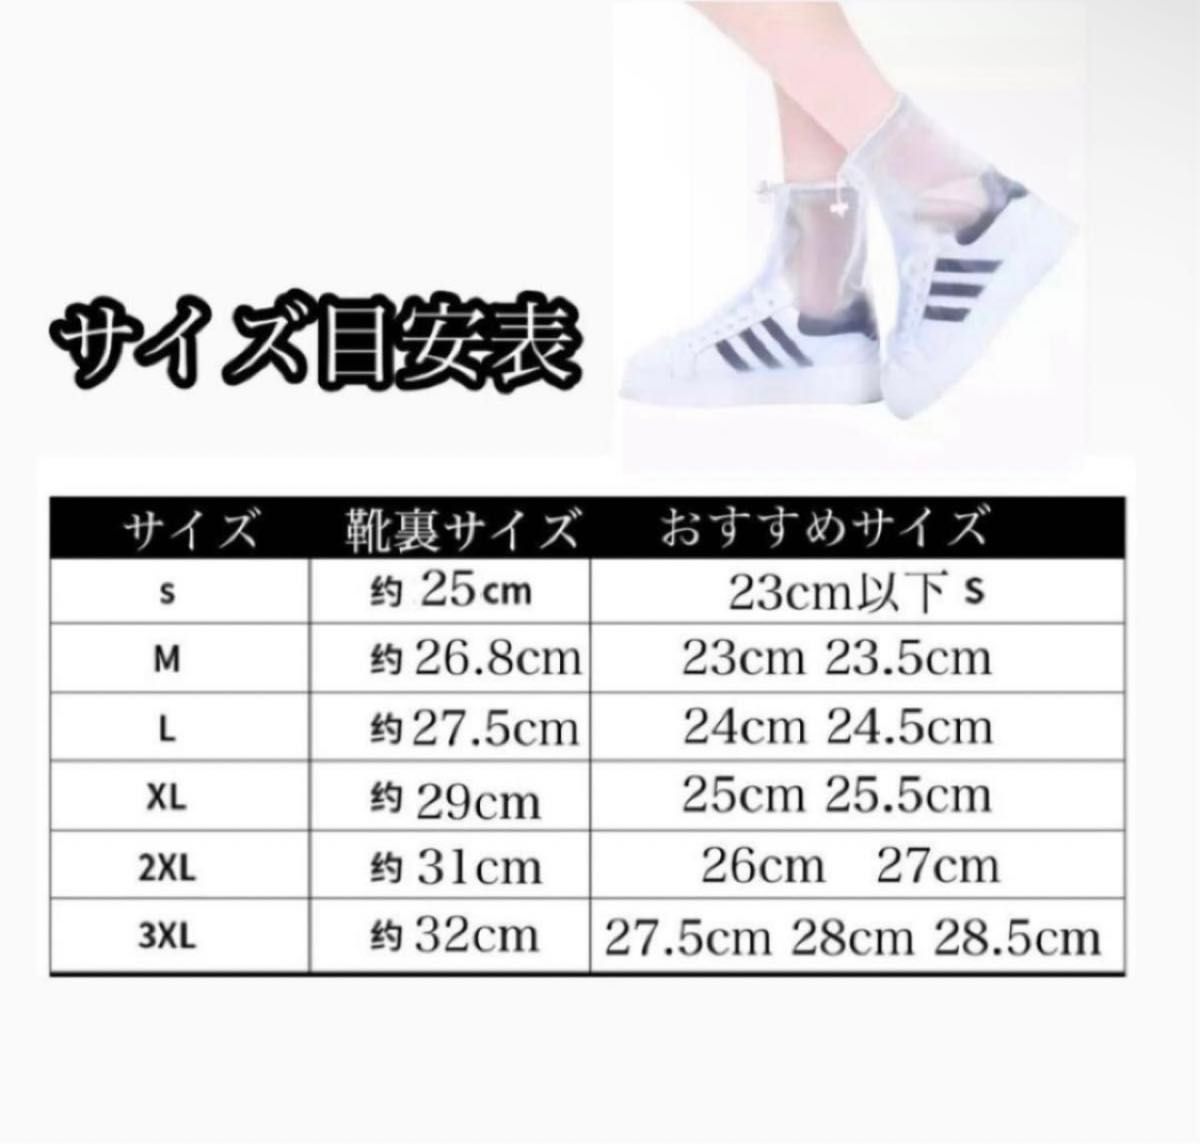 【3XL】防水 レインシューズ レイン シューズ 靴カバー